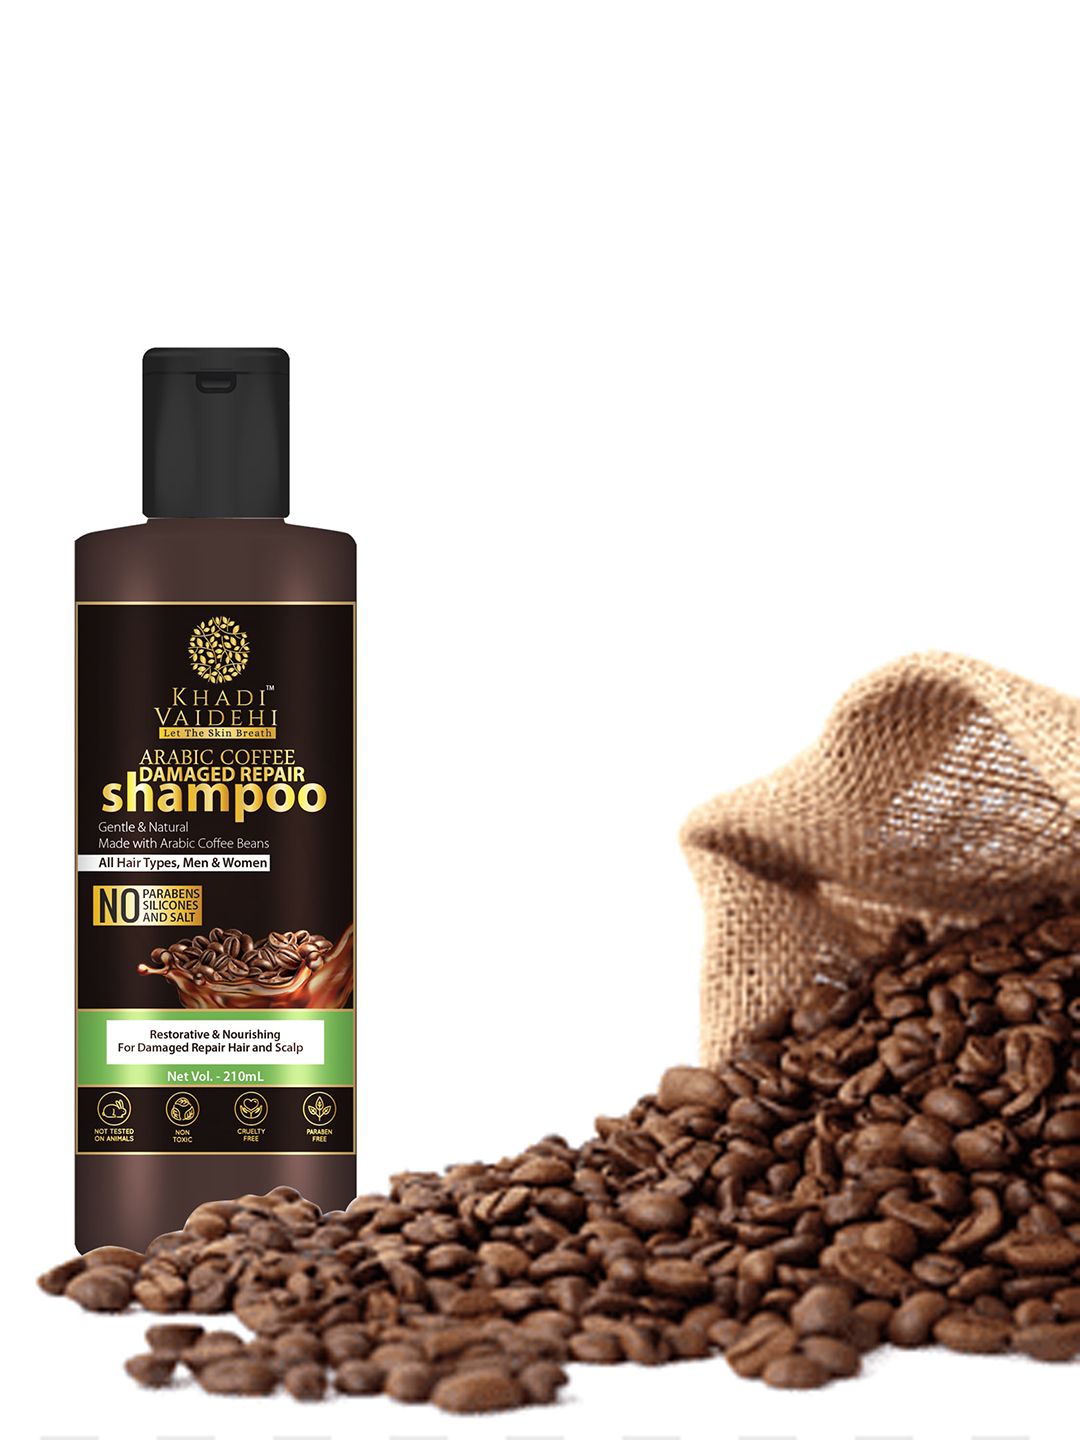 Khadi Vaidehi Arabic Coffee Damaged Repair Shampoo for All Hair Types - 210 ml Price in India